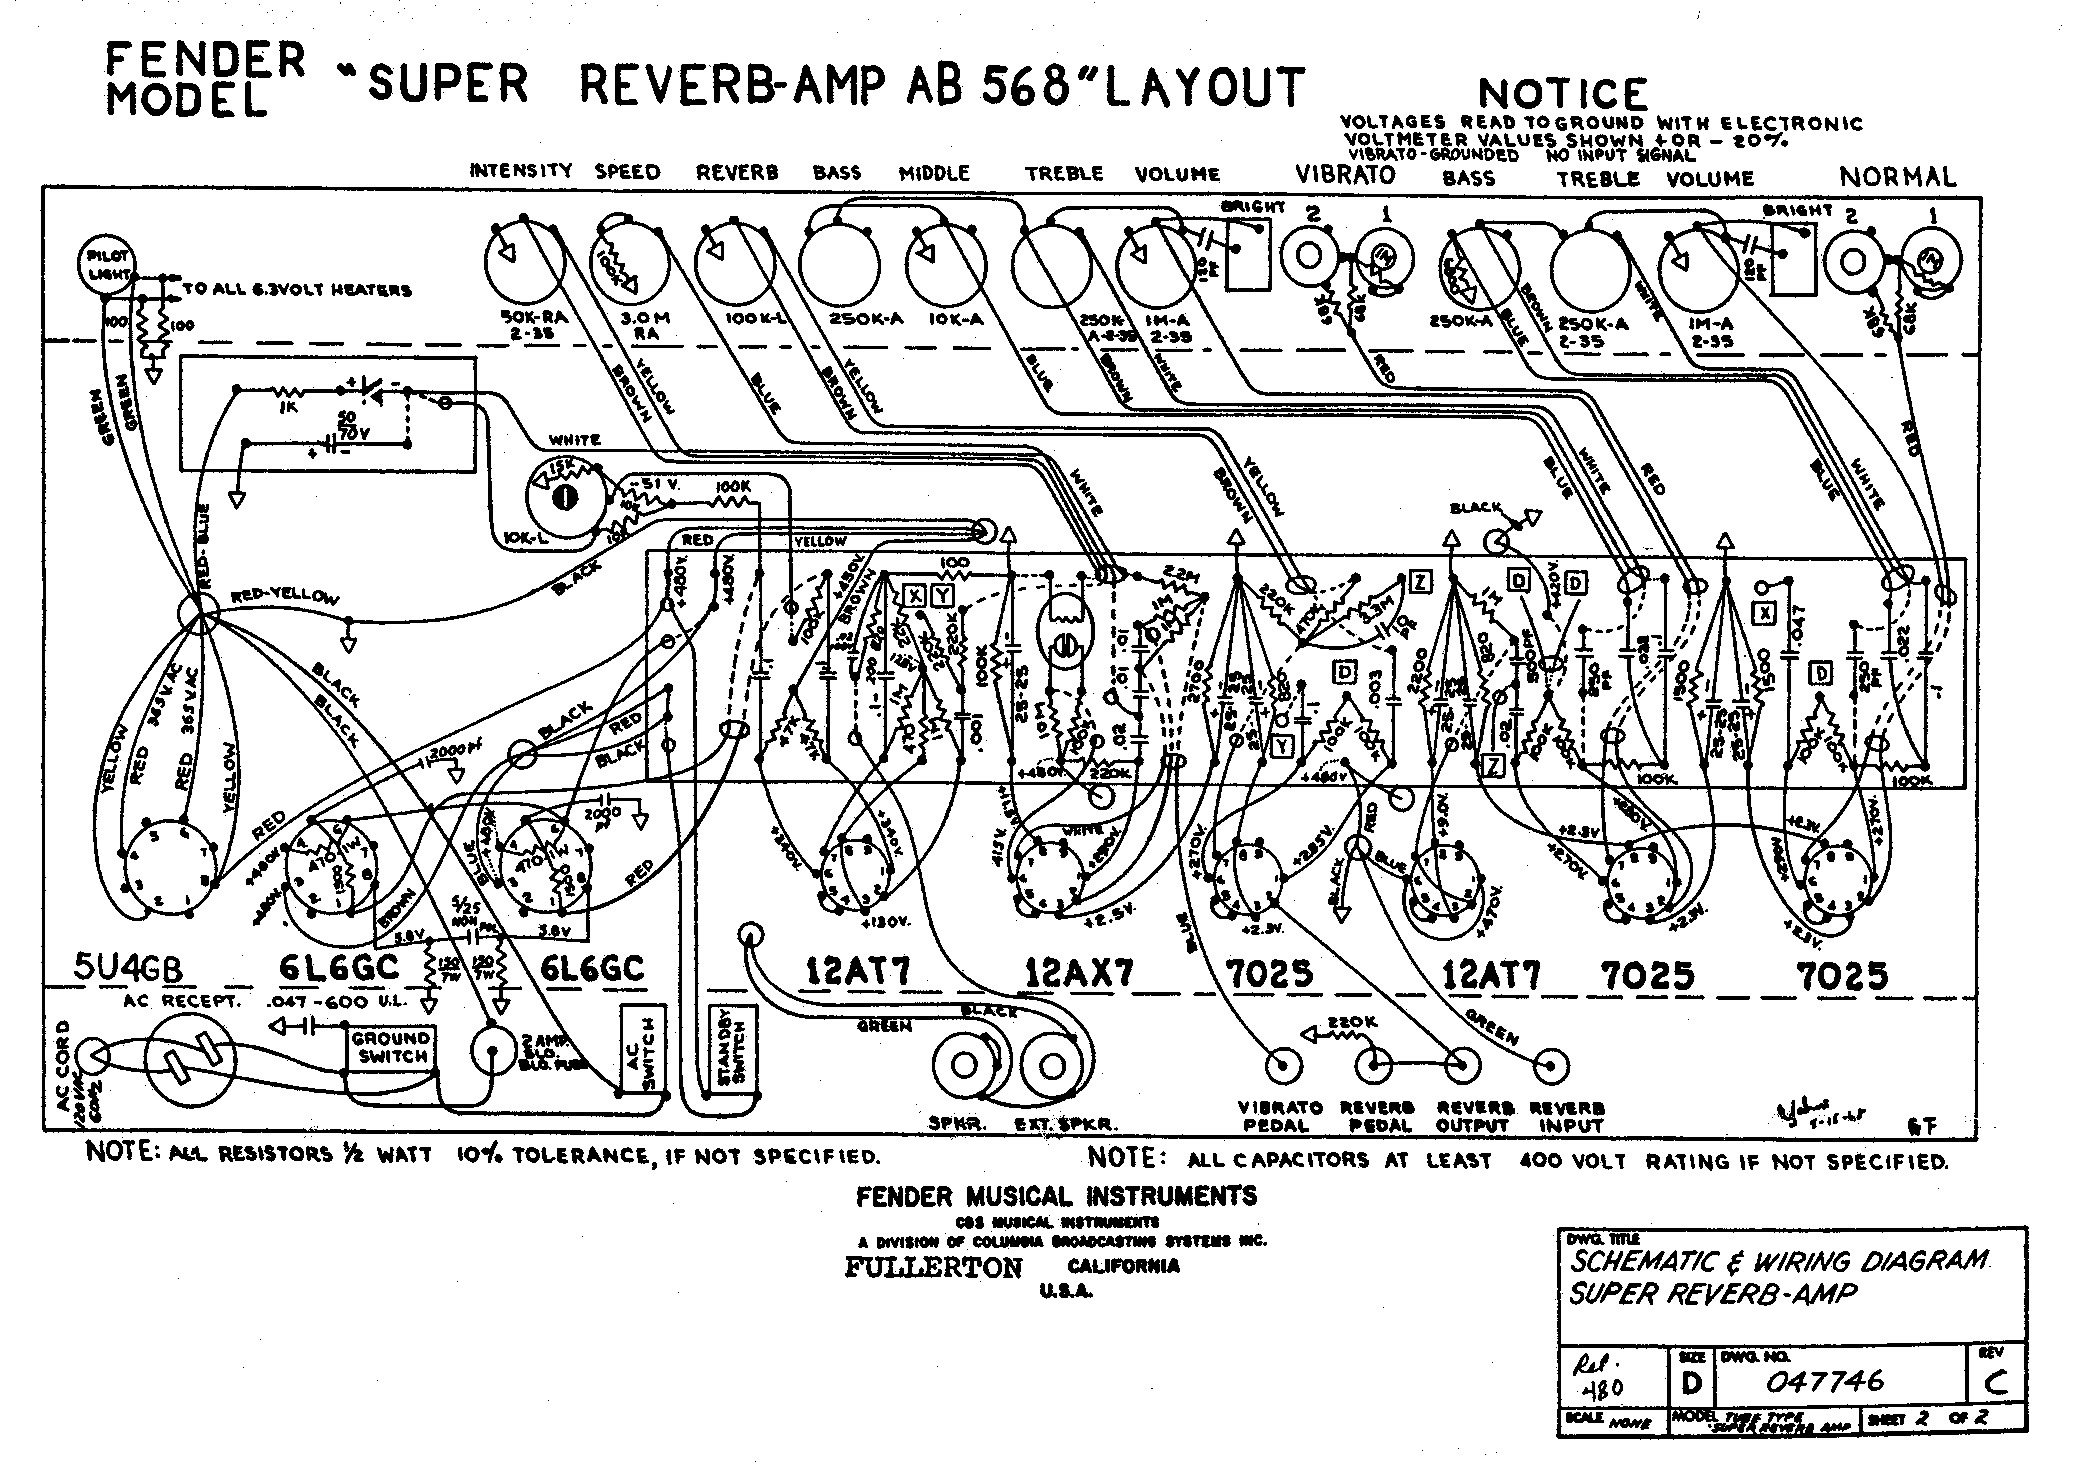 super reverb ab568 layout.pdf